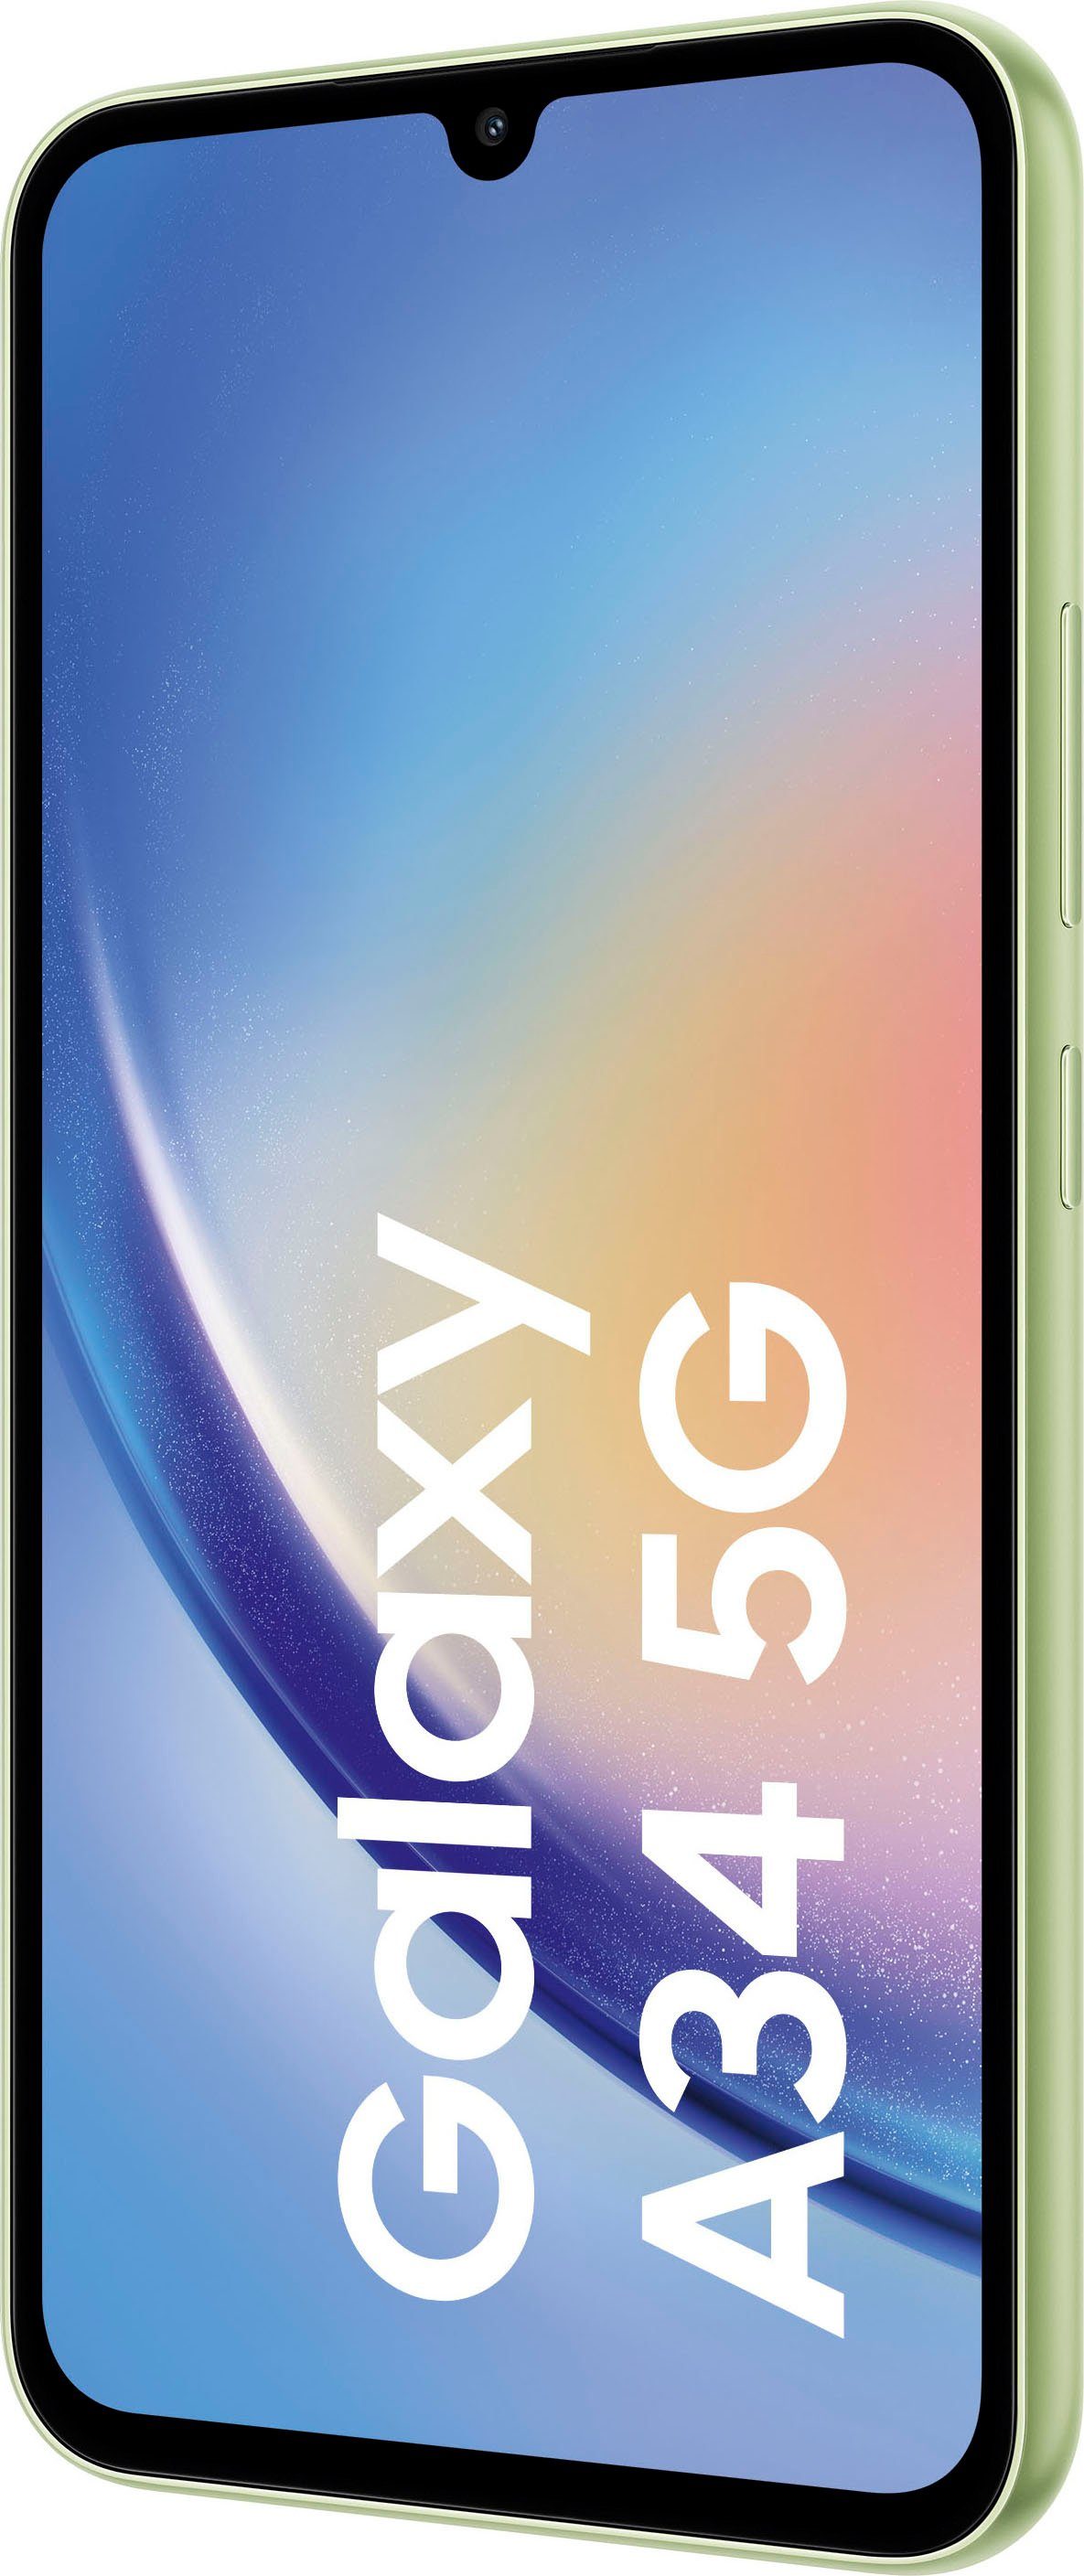 5G Kamera) 256GB A34 48 GB Zoll, 256 Smartphone grün MP Galaxy Samsung Speicherplatz, leicht cm/6,6 (16,65